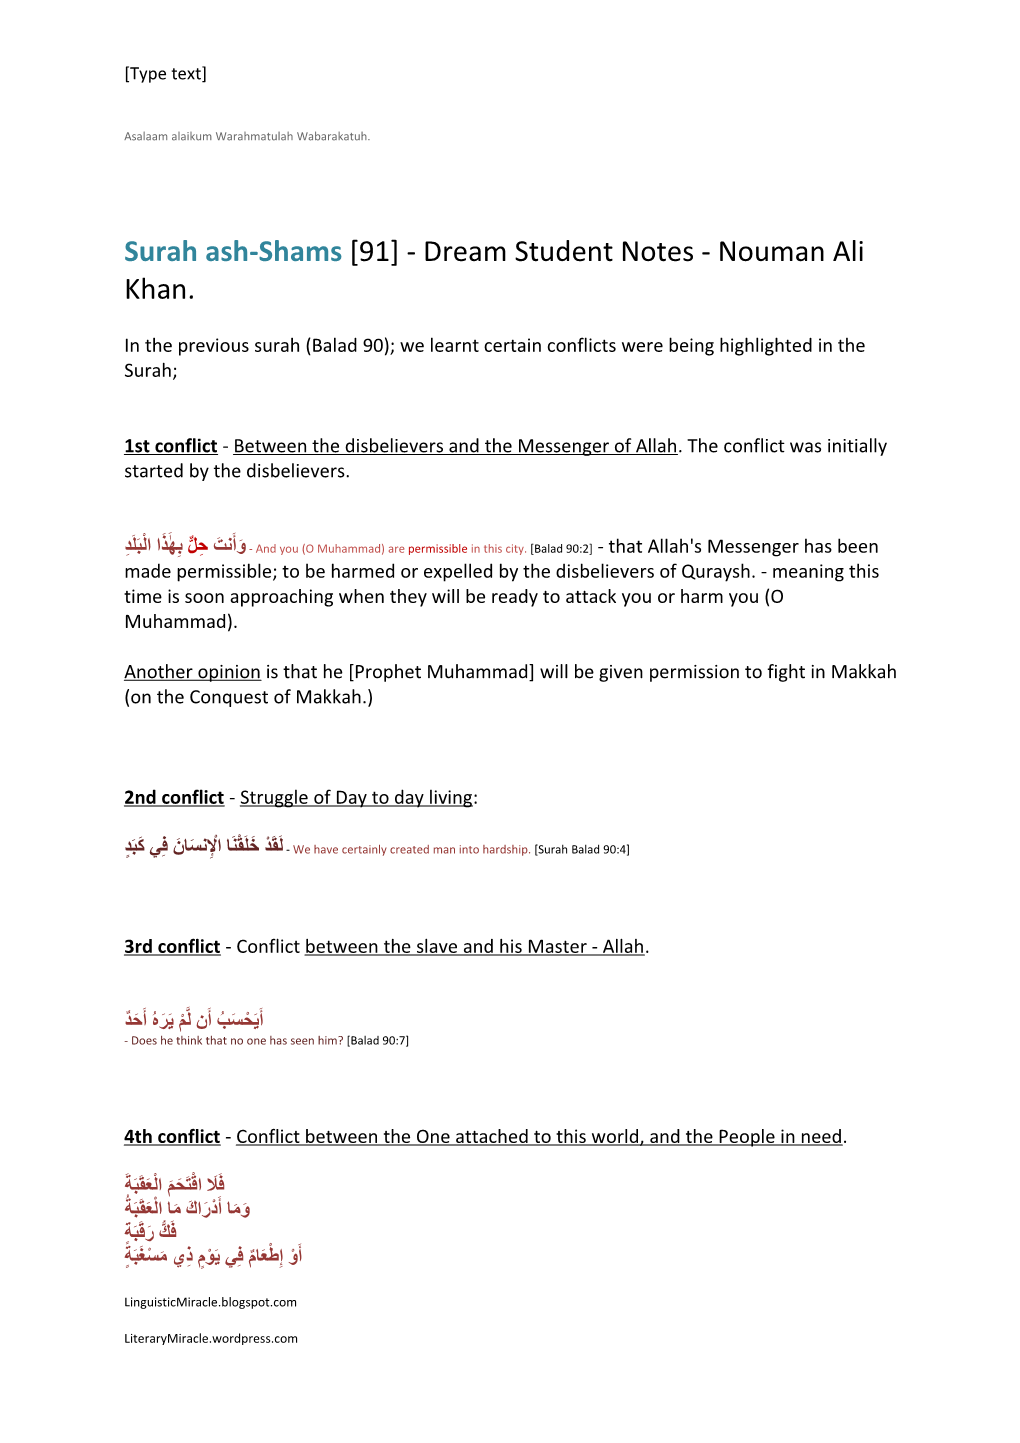 Surah Ash-Shams [91] - Dream Student Notes - Nouman Ali Khan